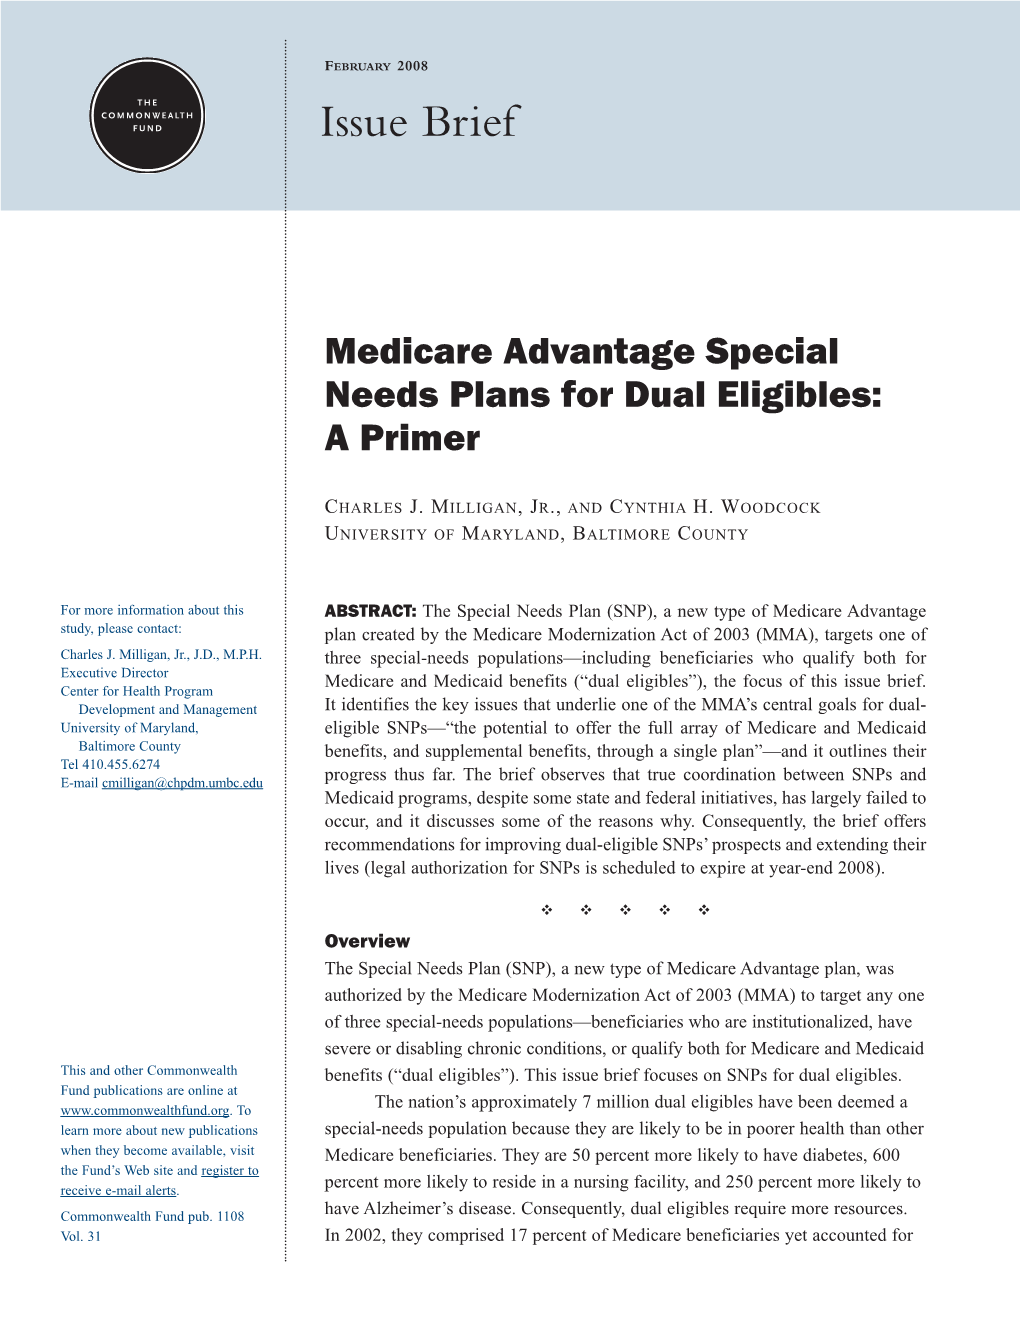 Medicare Advantage Special Needs Plans for Dual Eligibles: a Primer